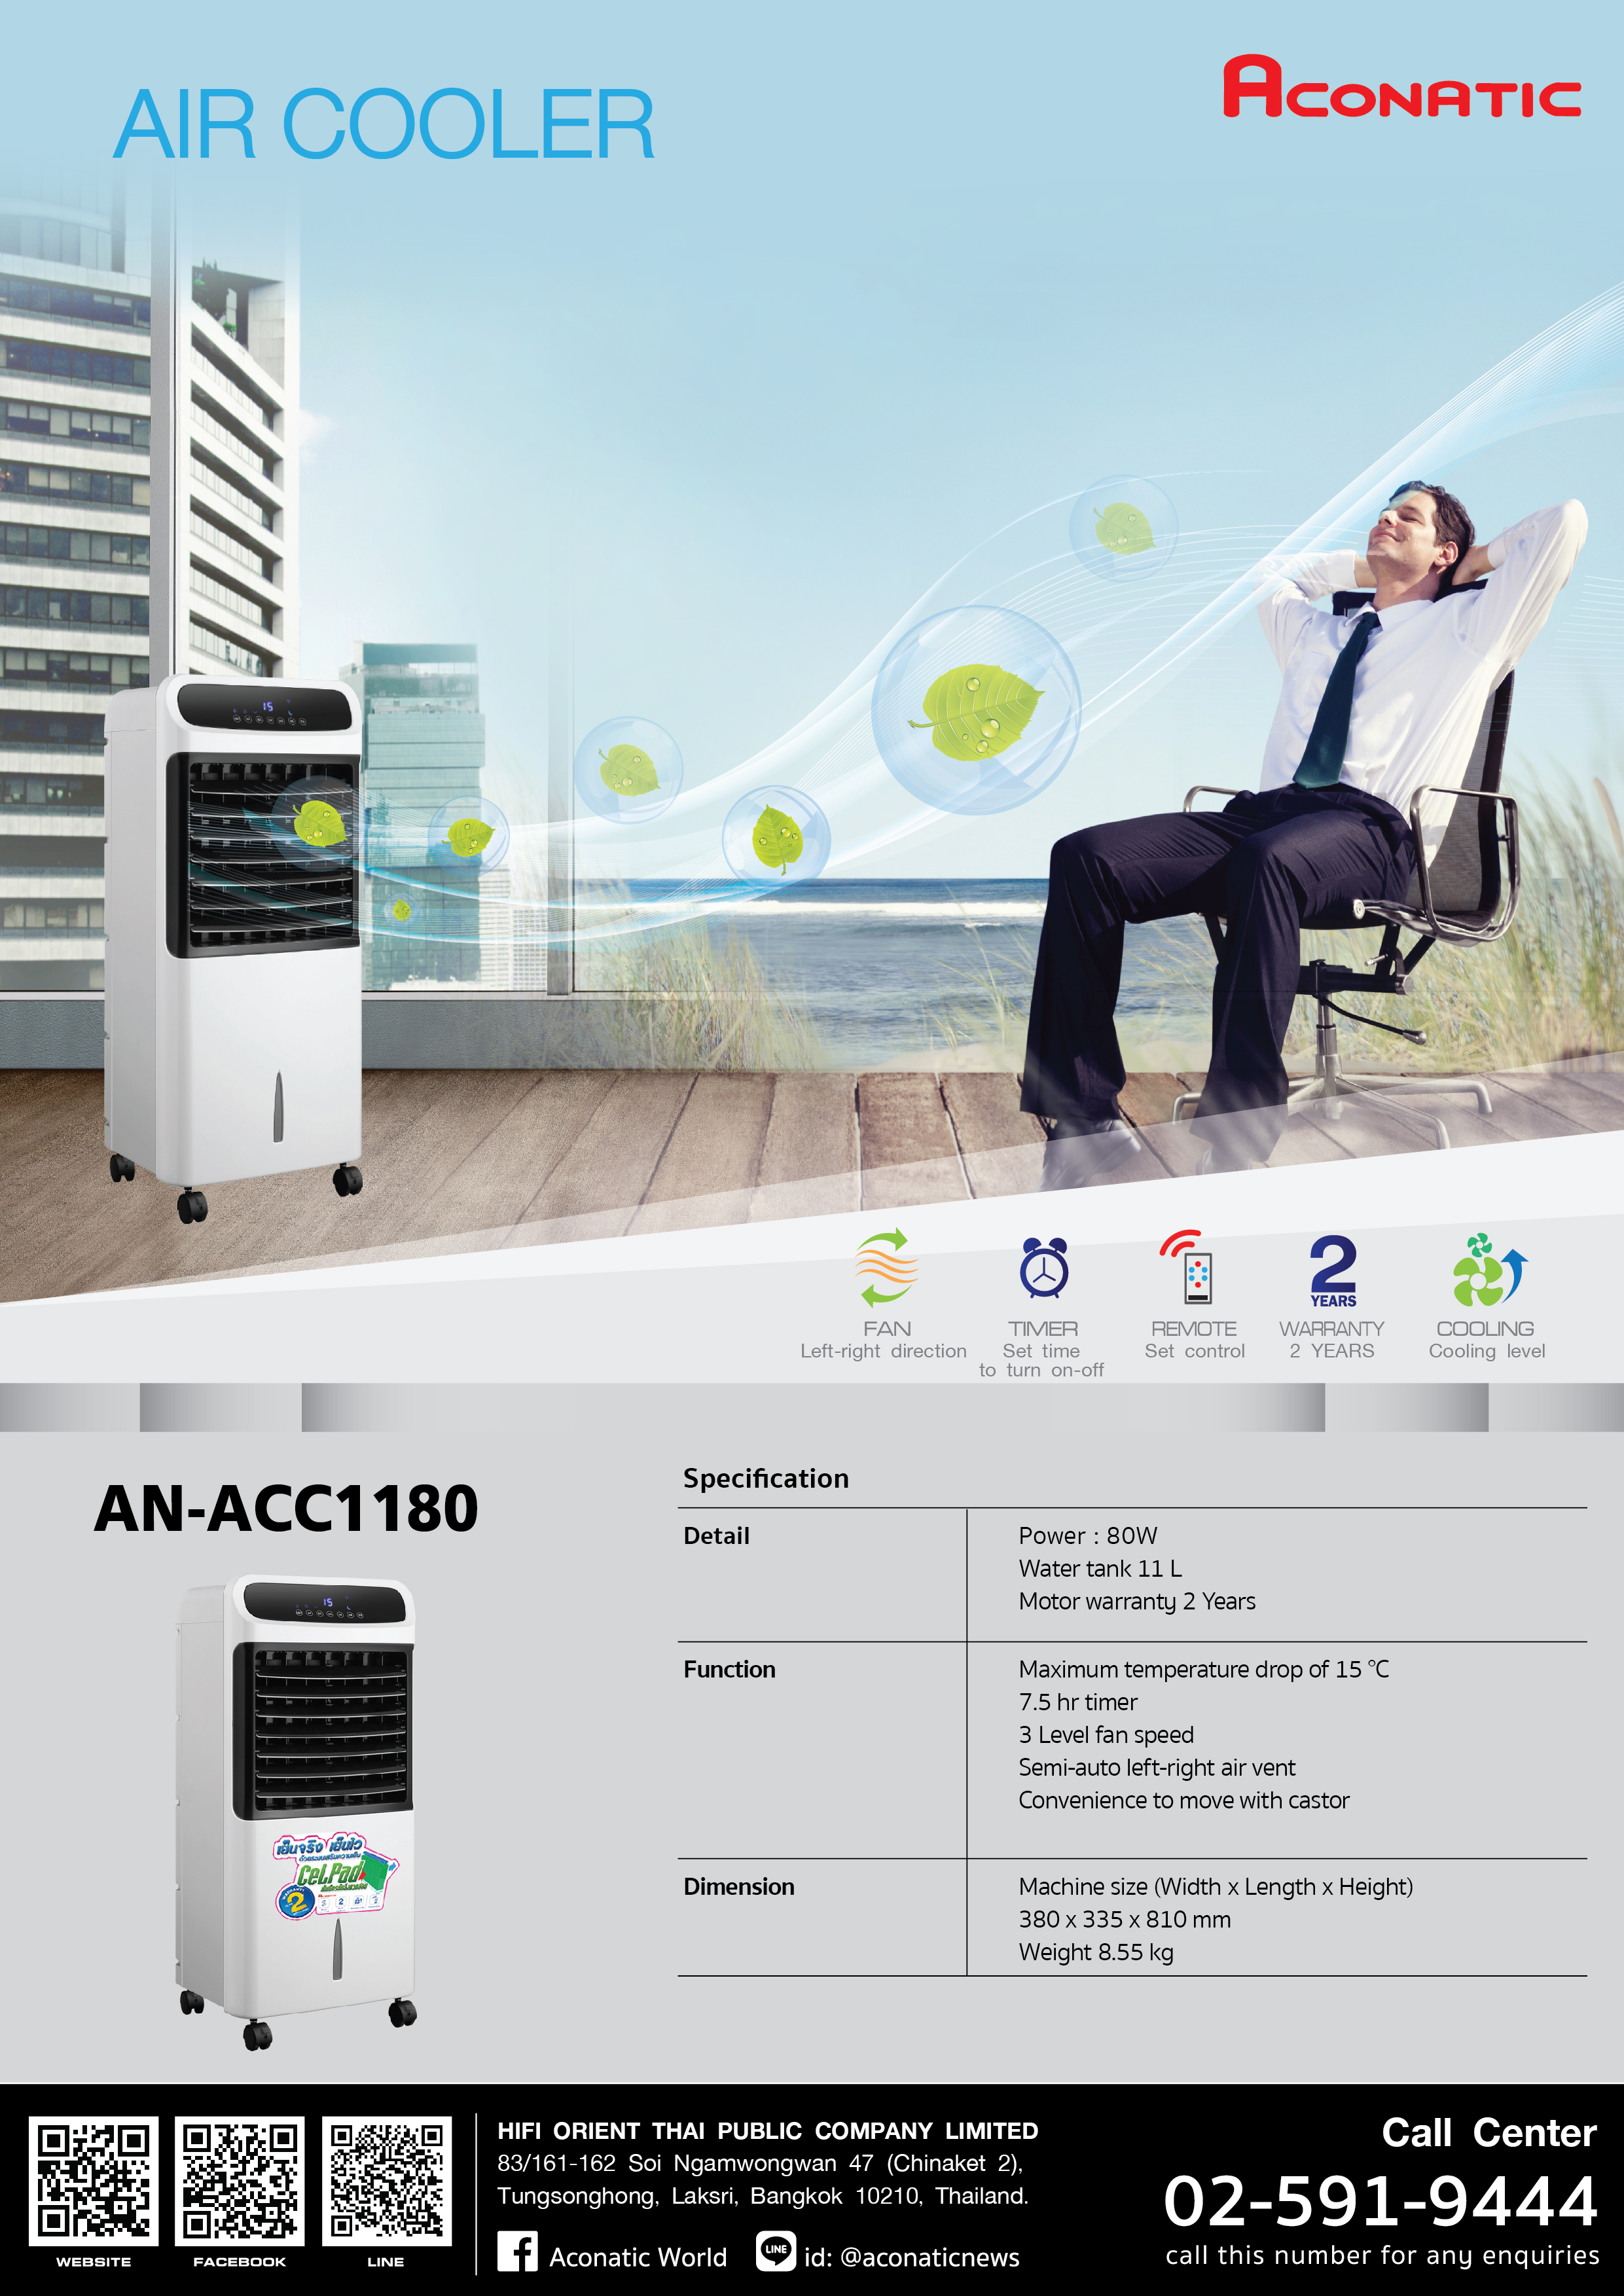 Air Cooler model AN-ACC1180